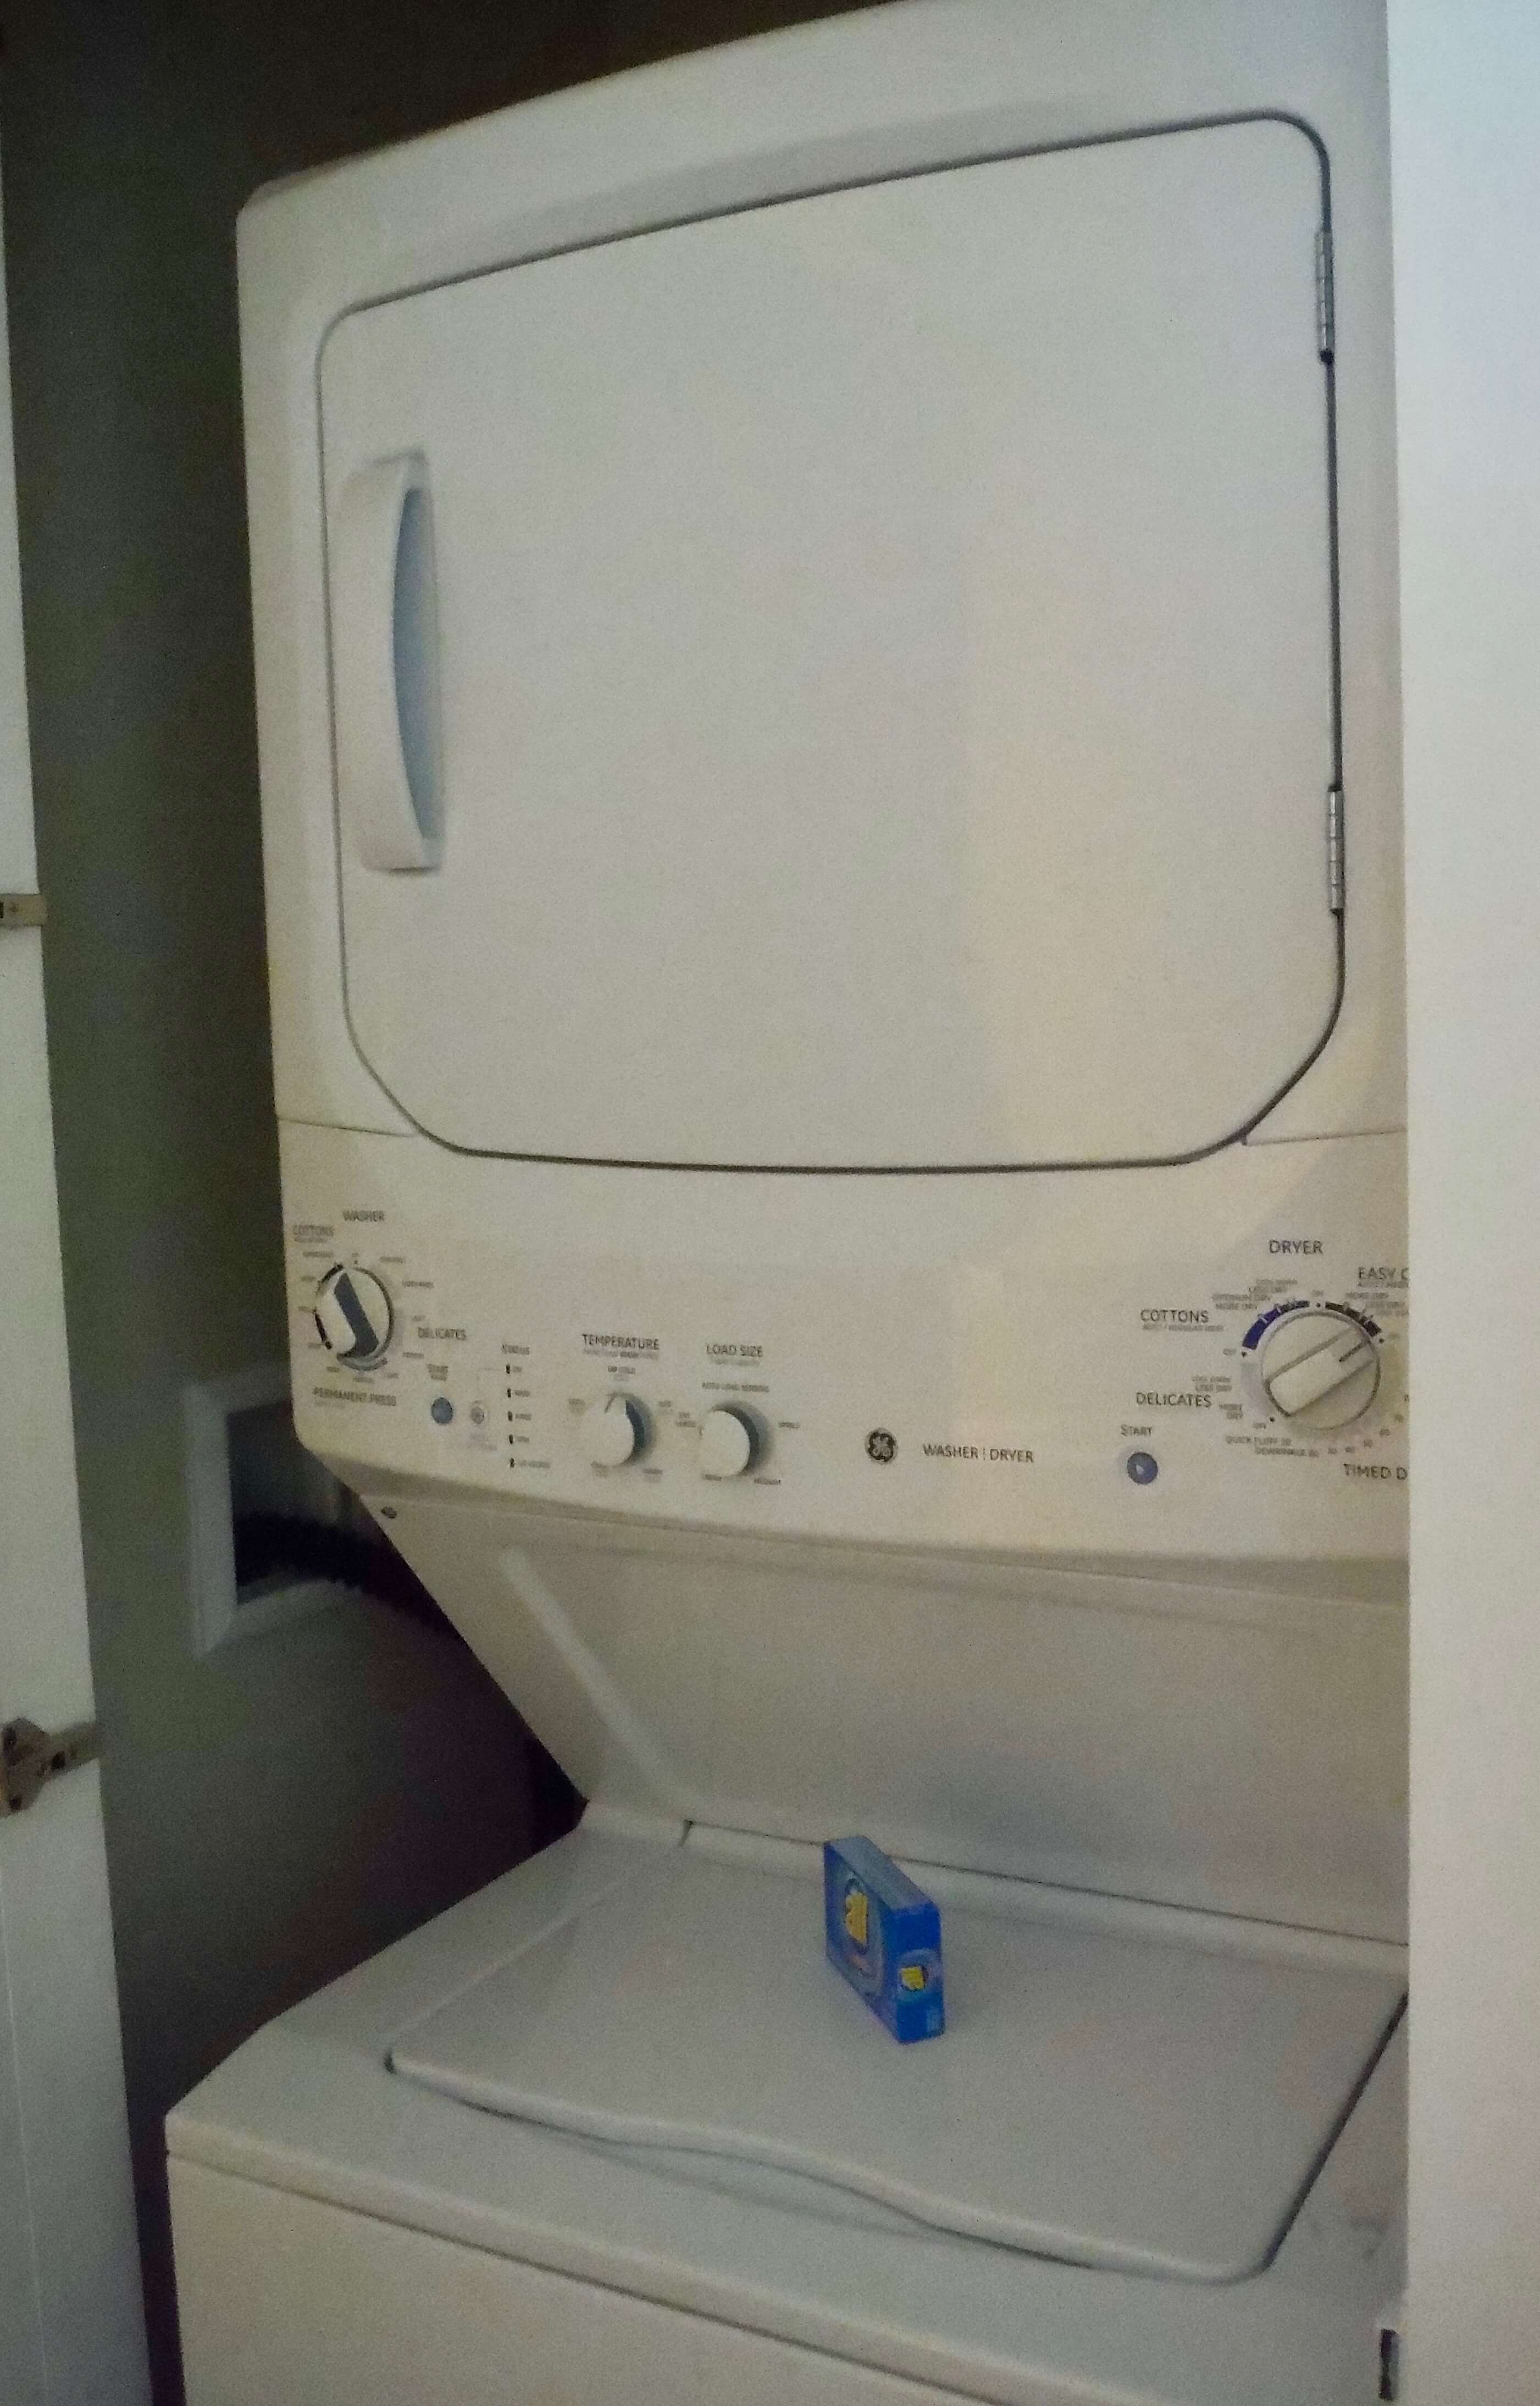 DVC GFV washer dryer